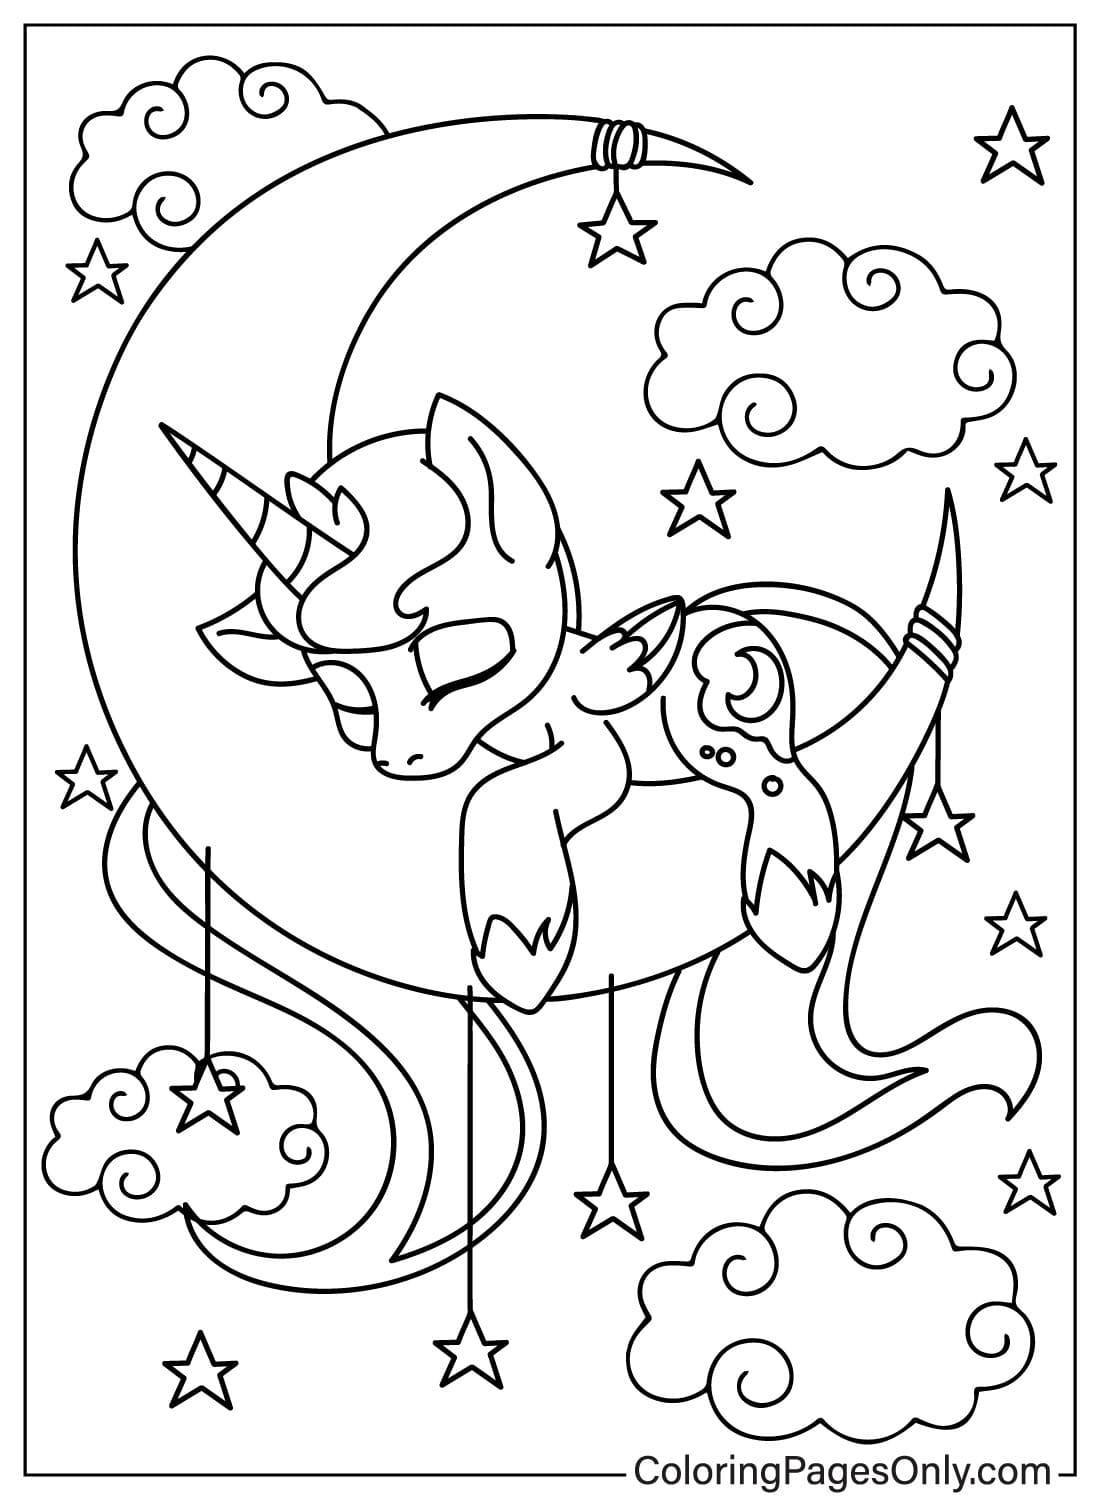 Coloriage de la princesse Luna dort sur la lune de la princesse Luna